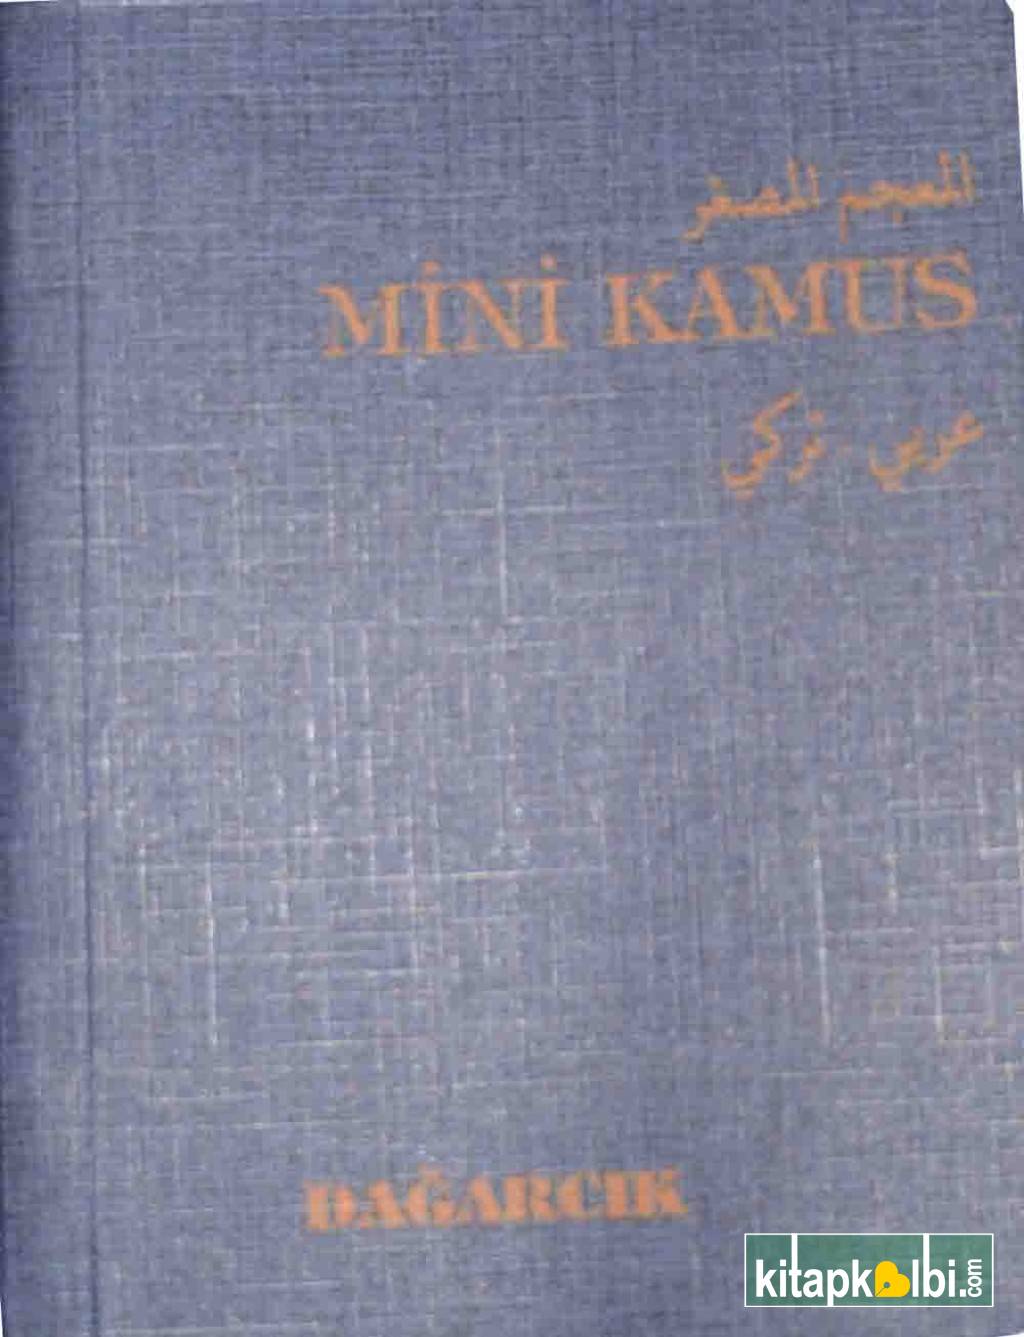 Mini Kamus